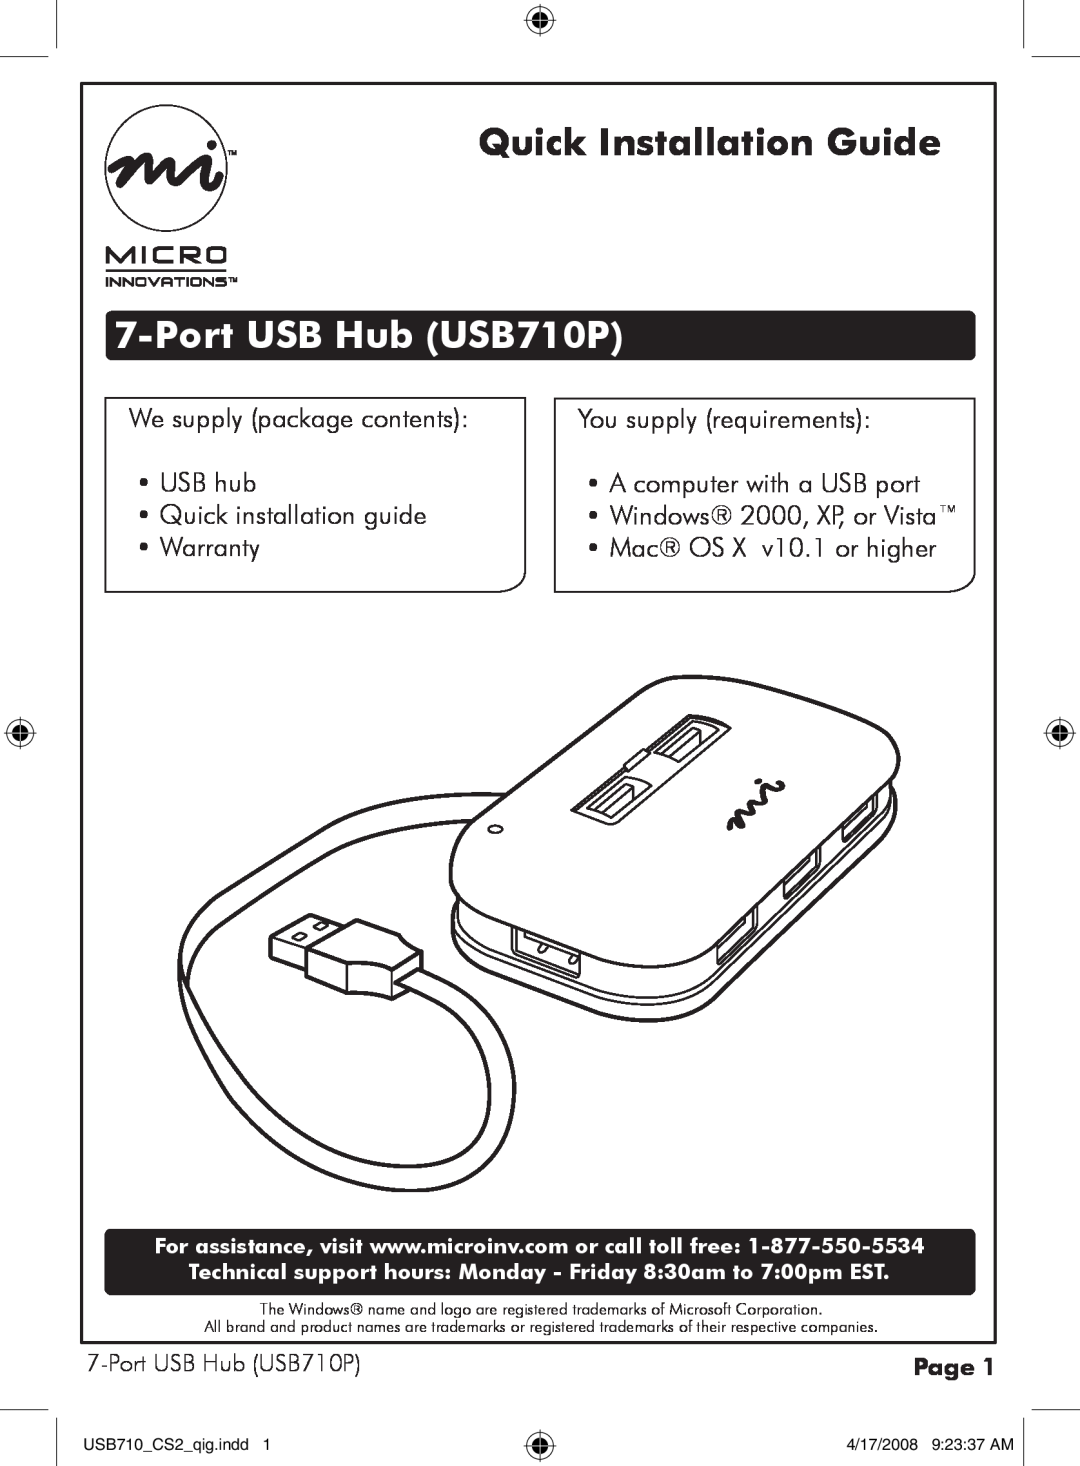 Micro Innovations warranty Quick Installation Guide, Port USB Hub USB710P, Windows 2000, XP, or Vista, Page 